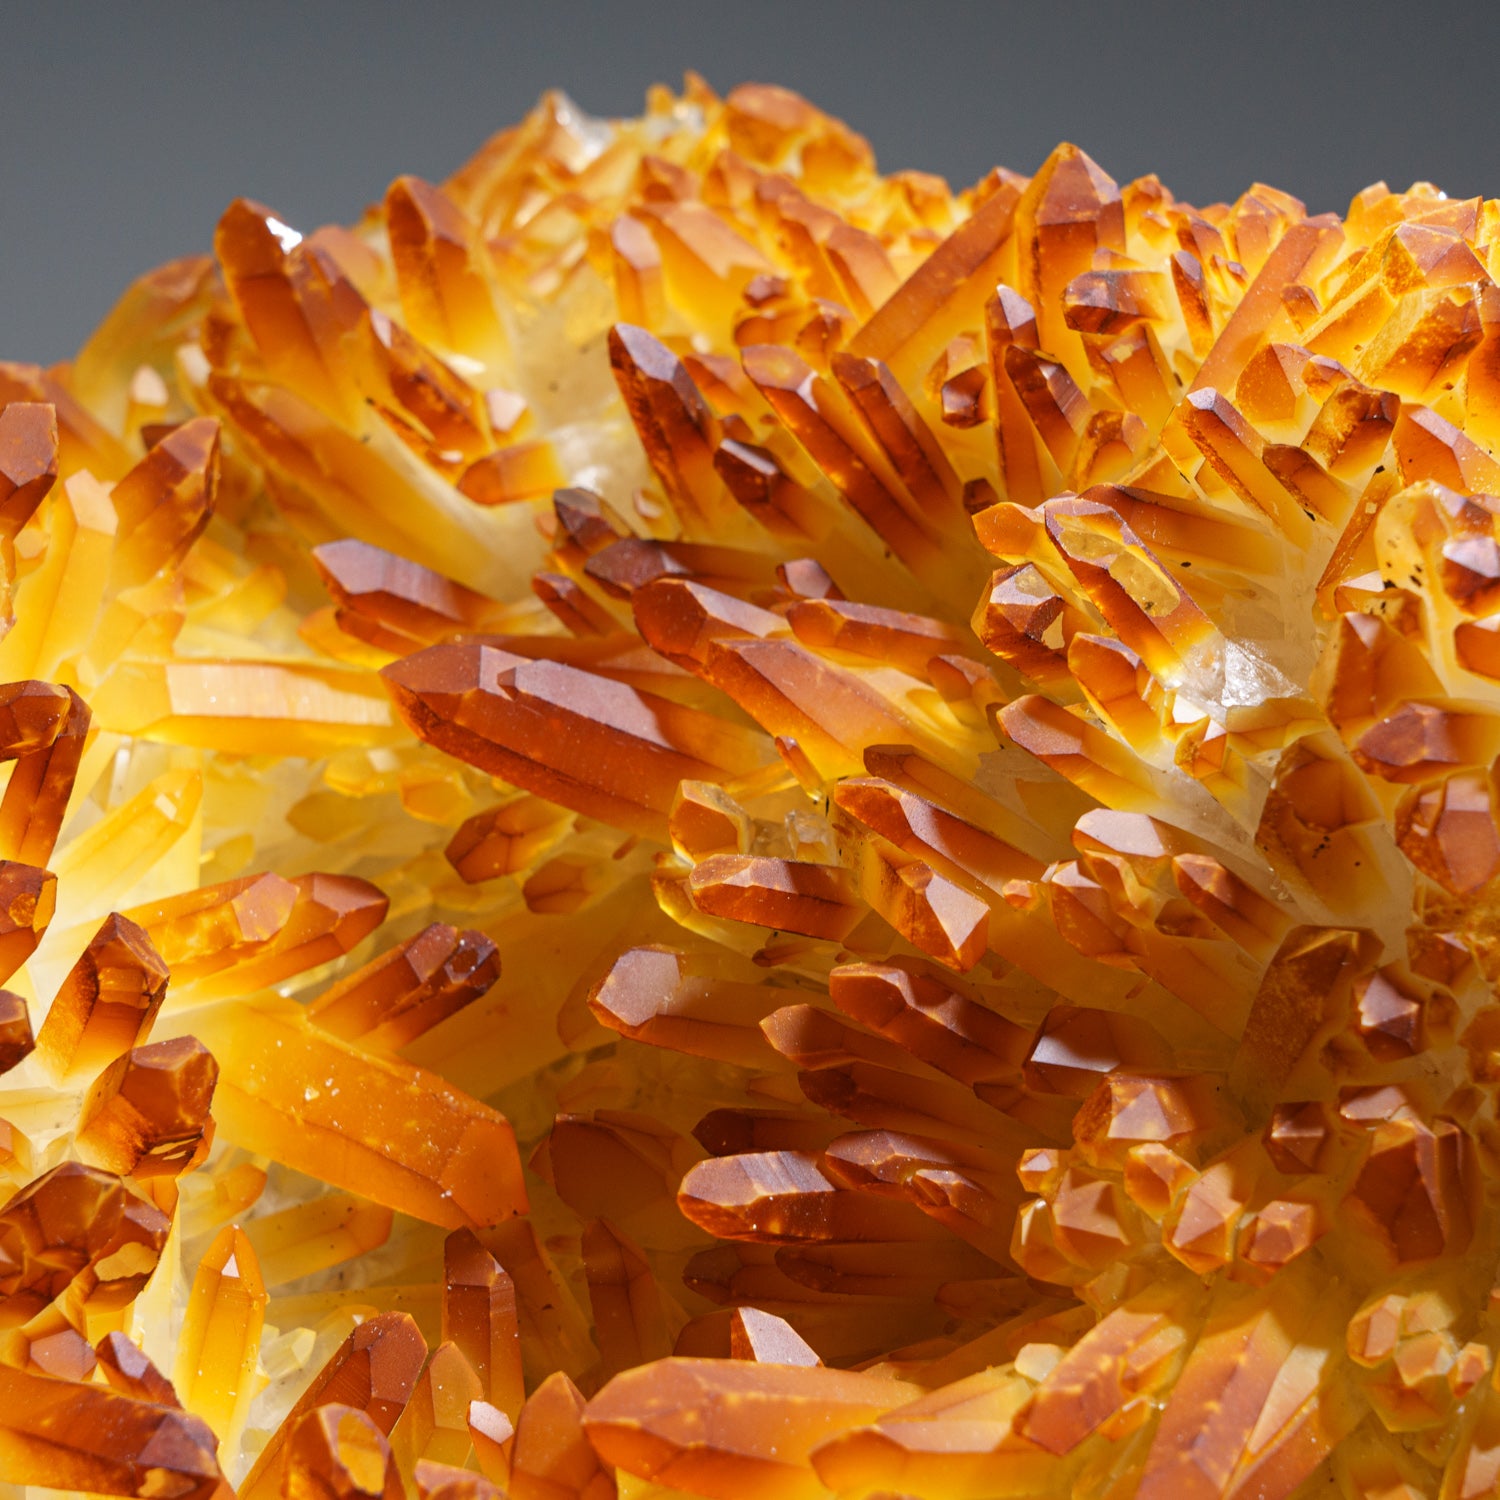 Orange Tangerine Quartz Crystal Cluster From Mongolia